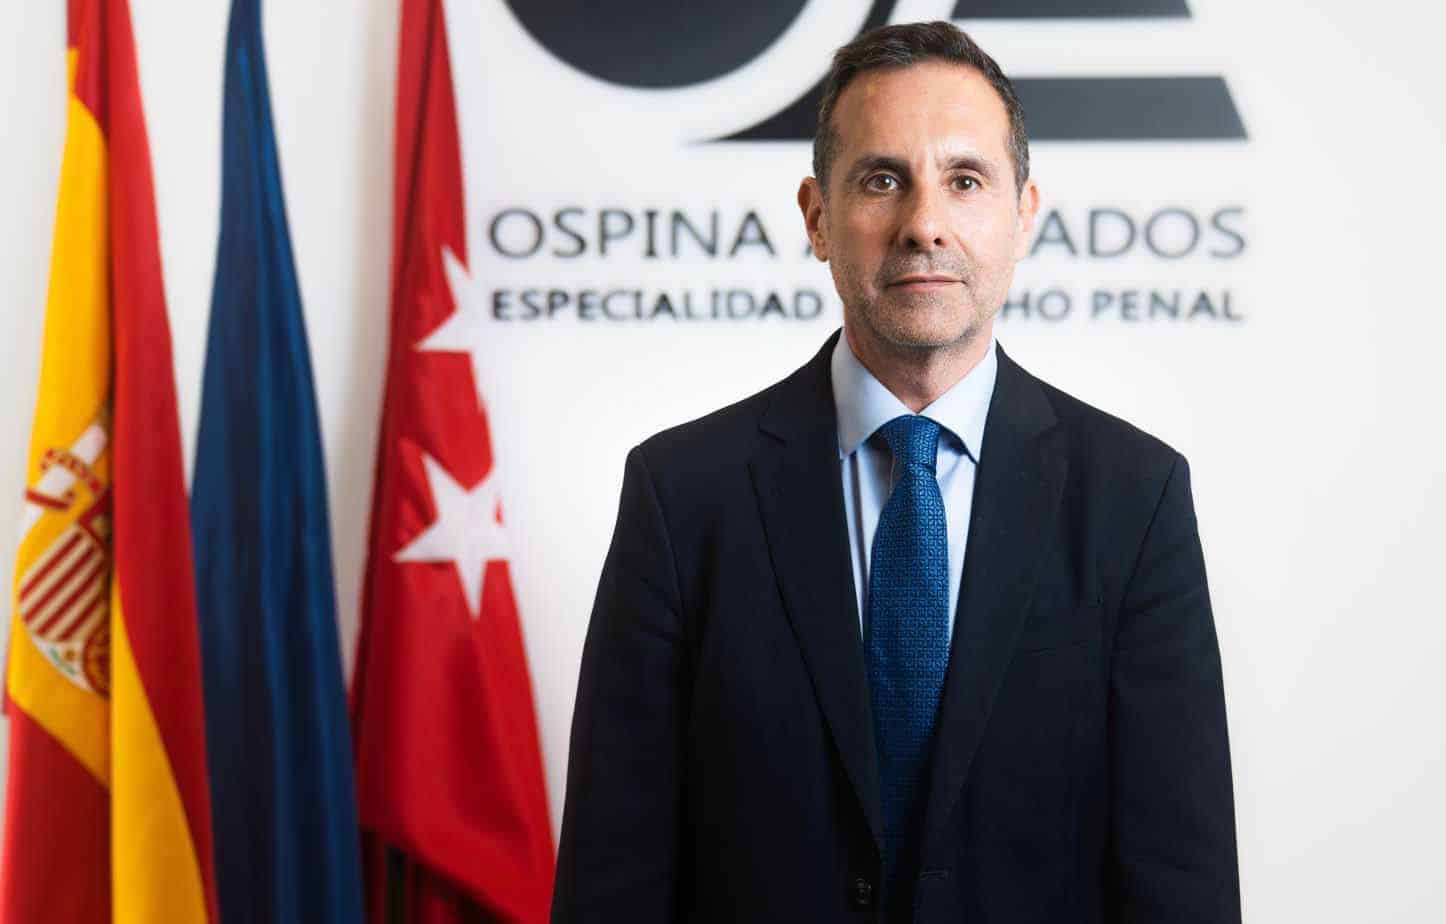 Ospina Abogados se refuerza con el exfiscal de la AN, Juan Antonio Jabaloy, para su área de penal económico